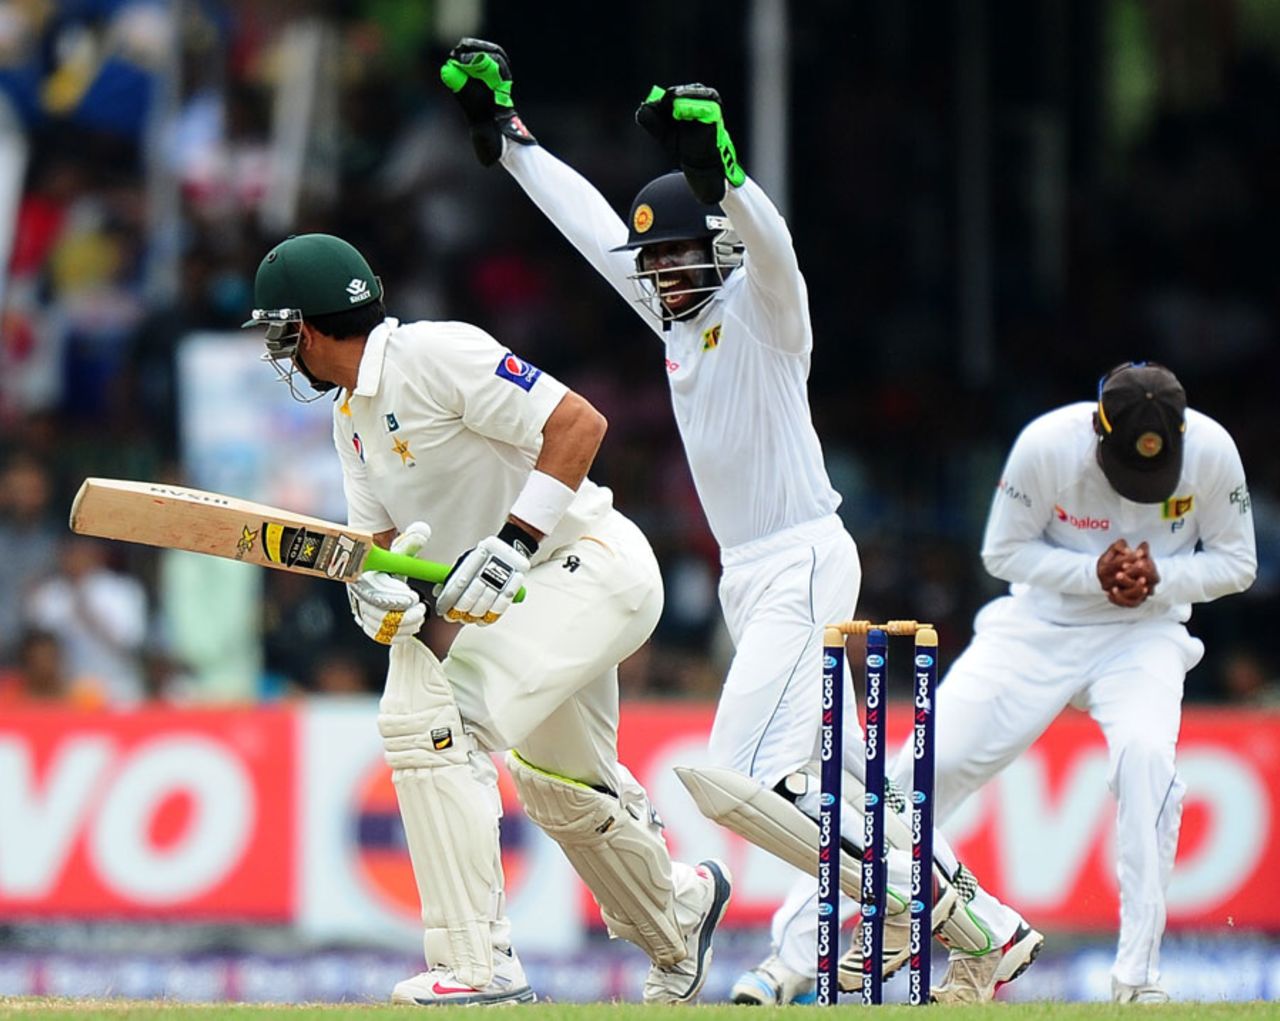 Mahela Jayawardene takes a catch at slip to dismiss Misbah-ul-Haq, Sri Lanka v Pakistan, 2nd Test, Colombo, 4th day, August 17, 2014